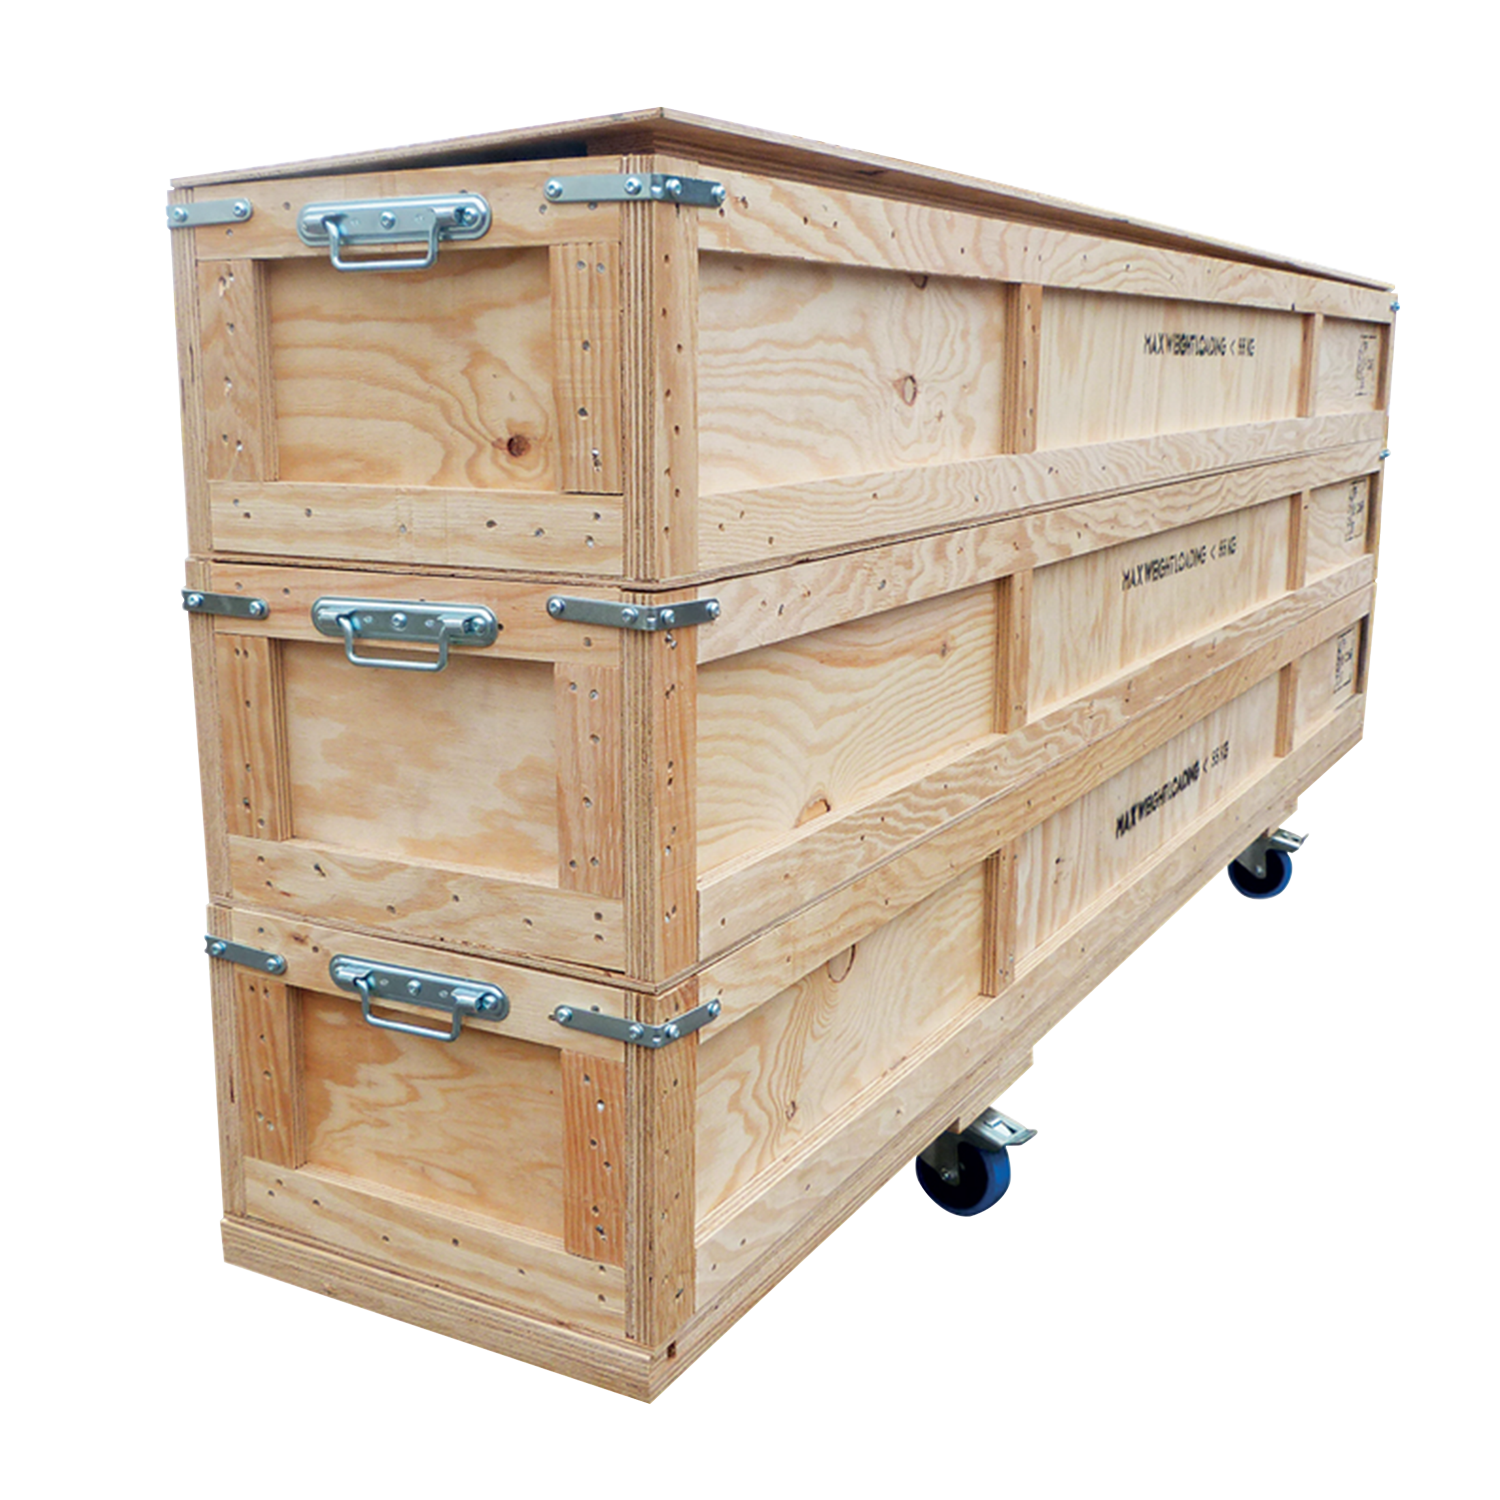 Custom made transport crate